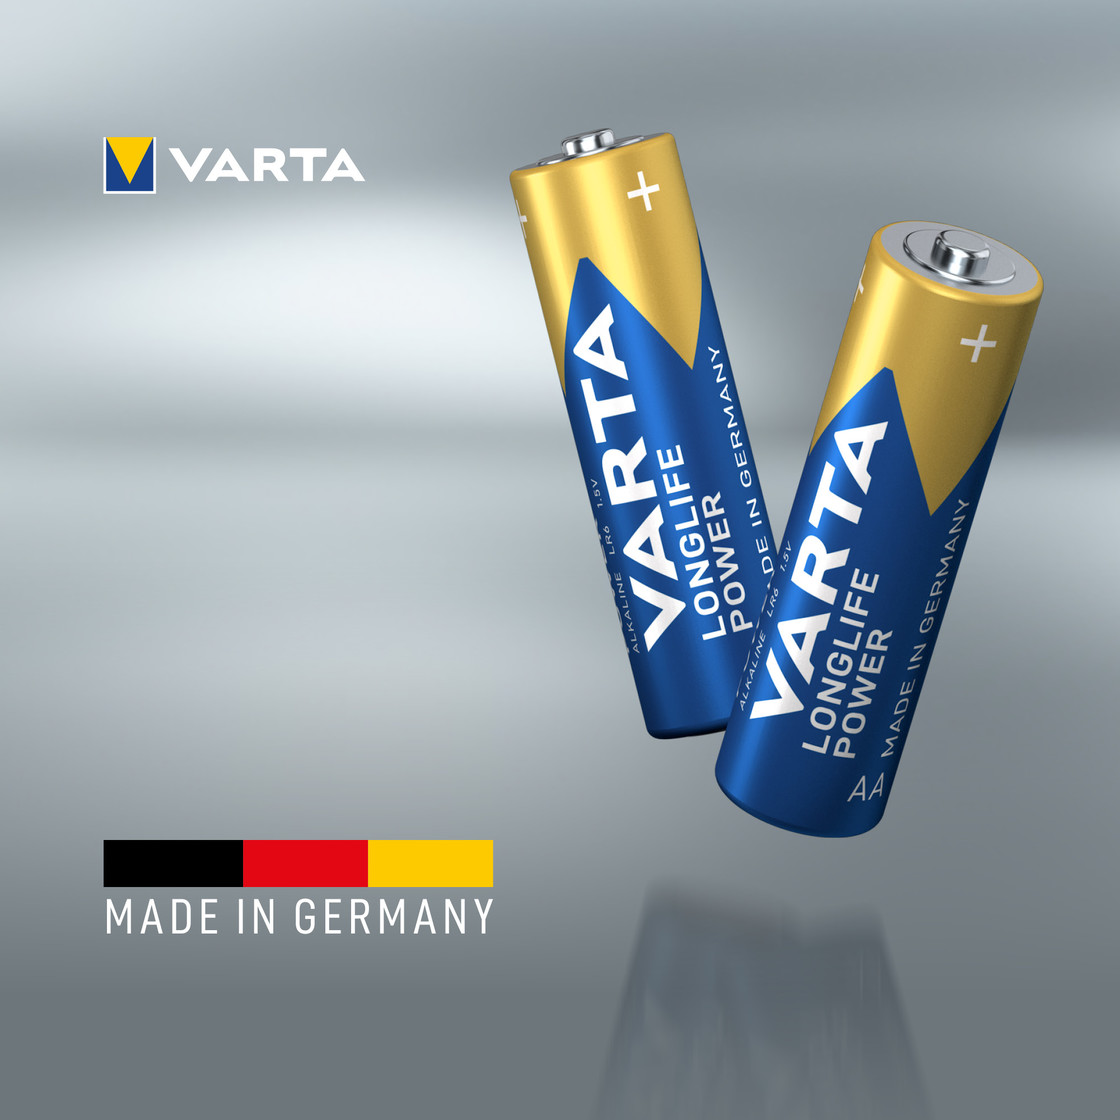 LONGLIFE Power Alkaline Battery Micro AAA 1.5V - 4 Items 1 item